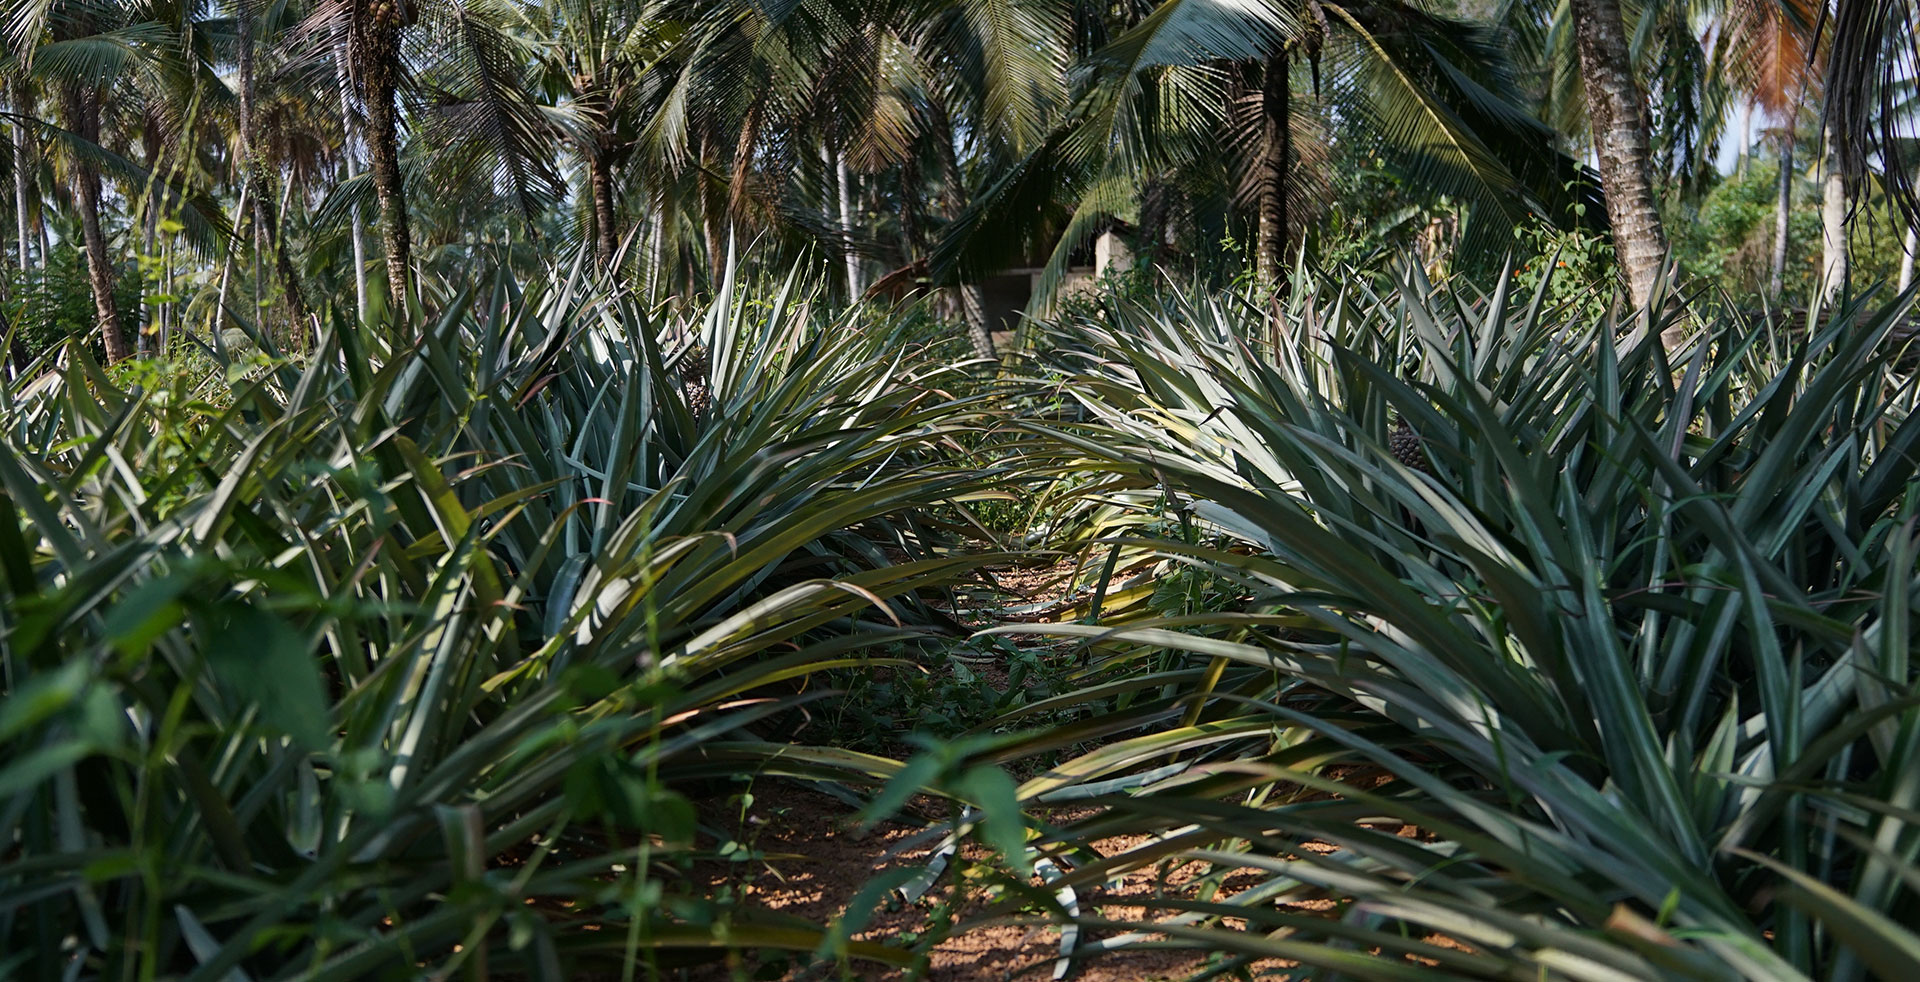 Pineapple Garden